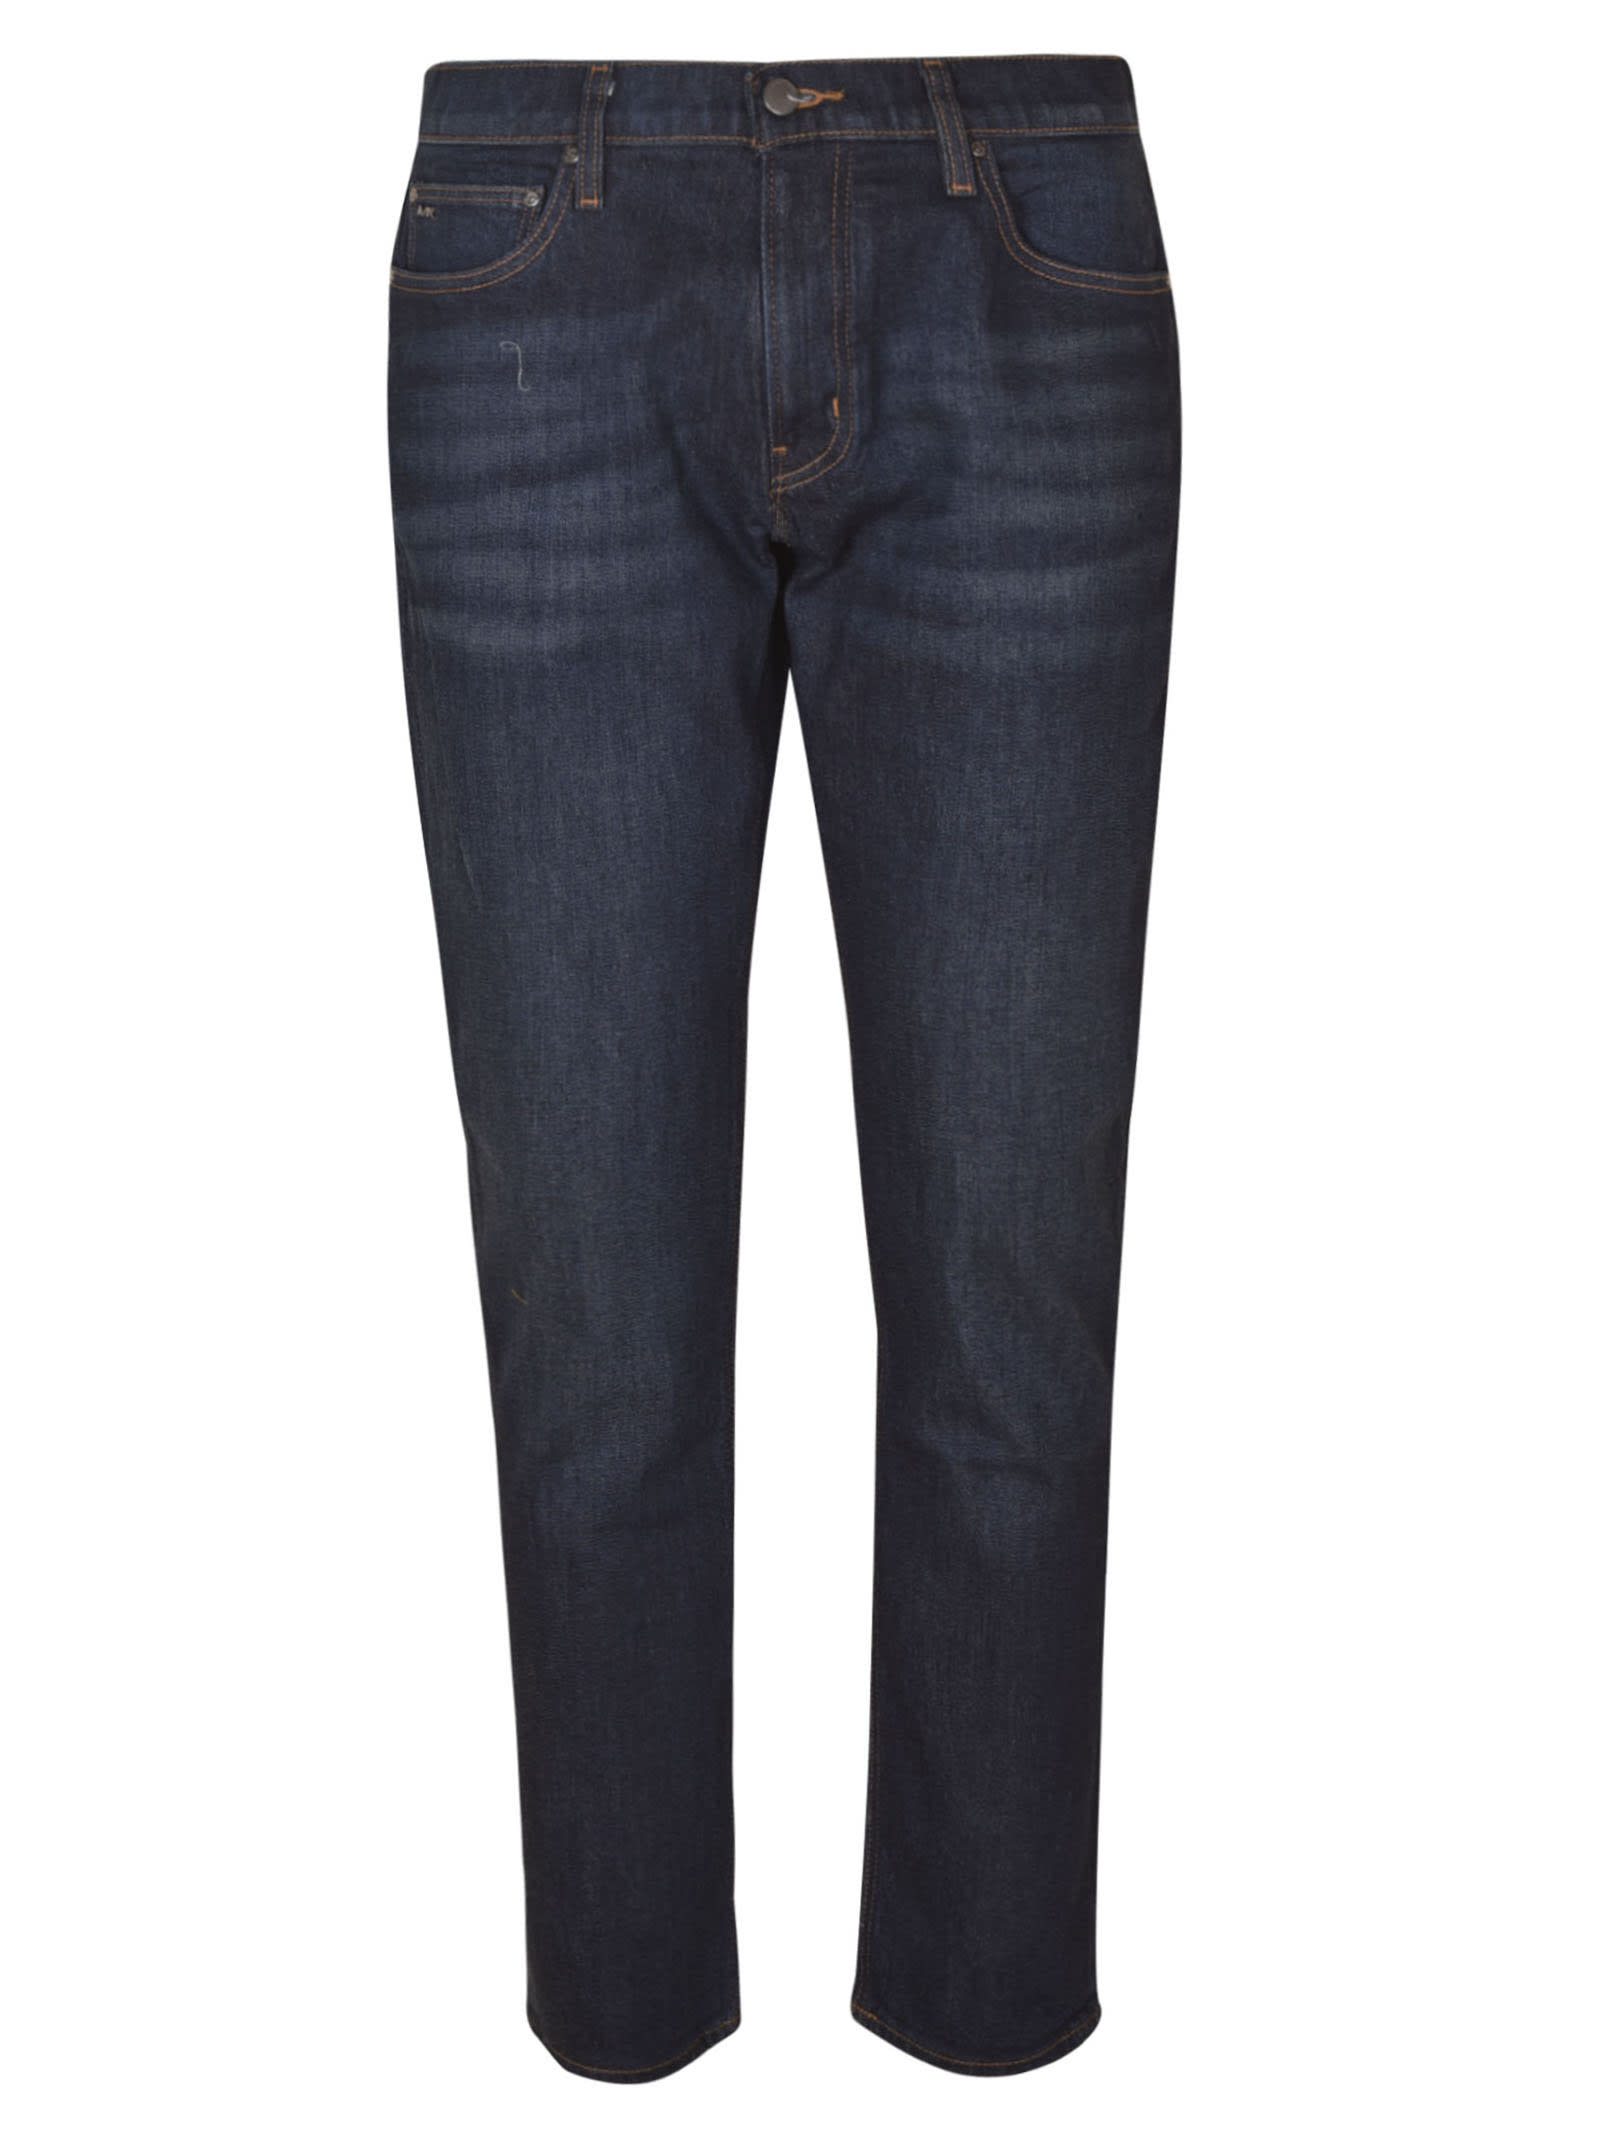 Michael Kors Regular 5 Pockets Jeans